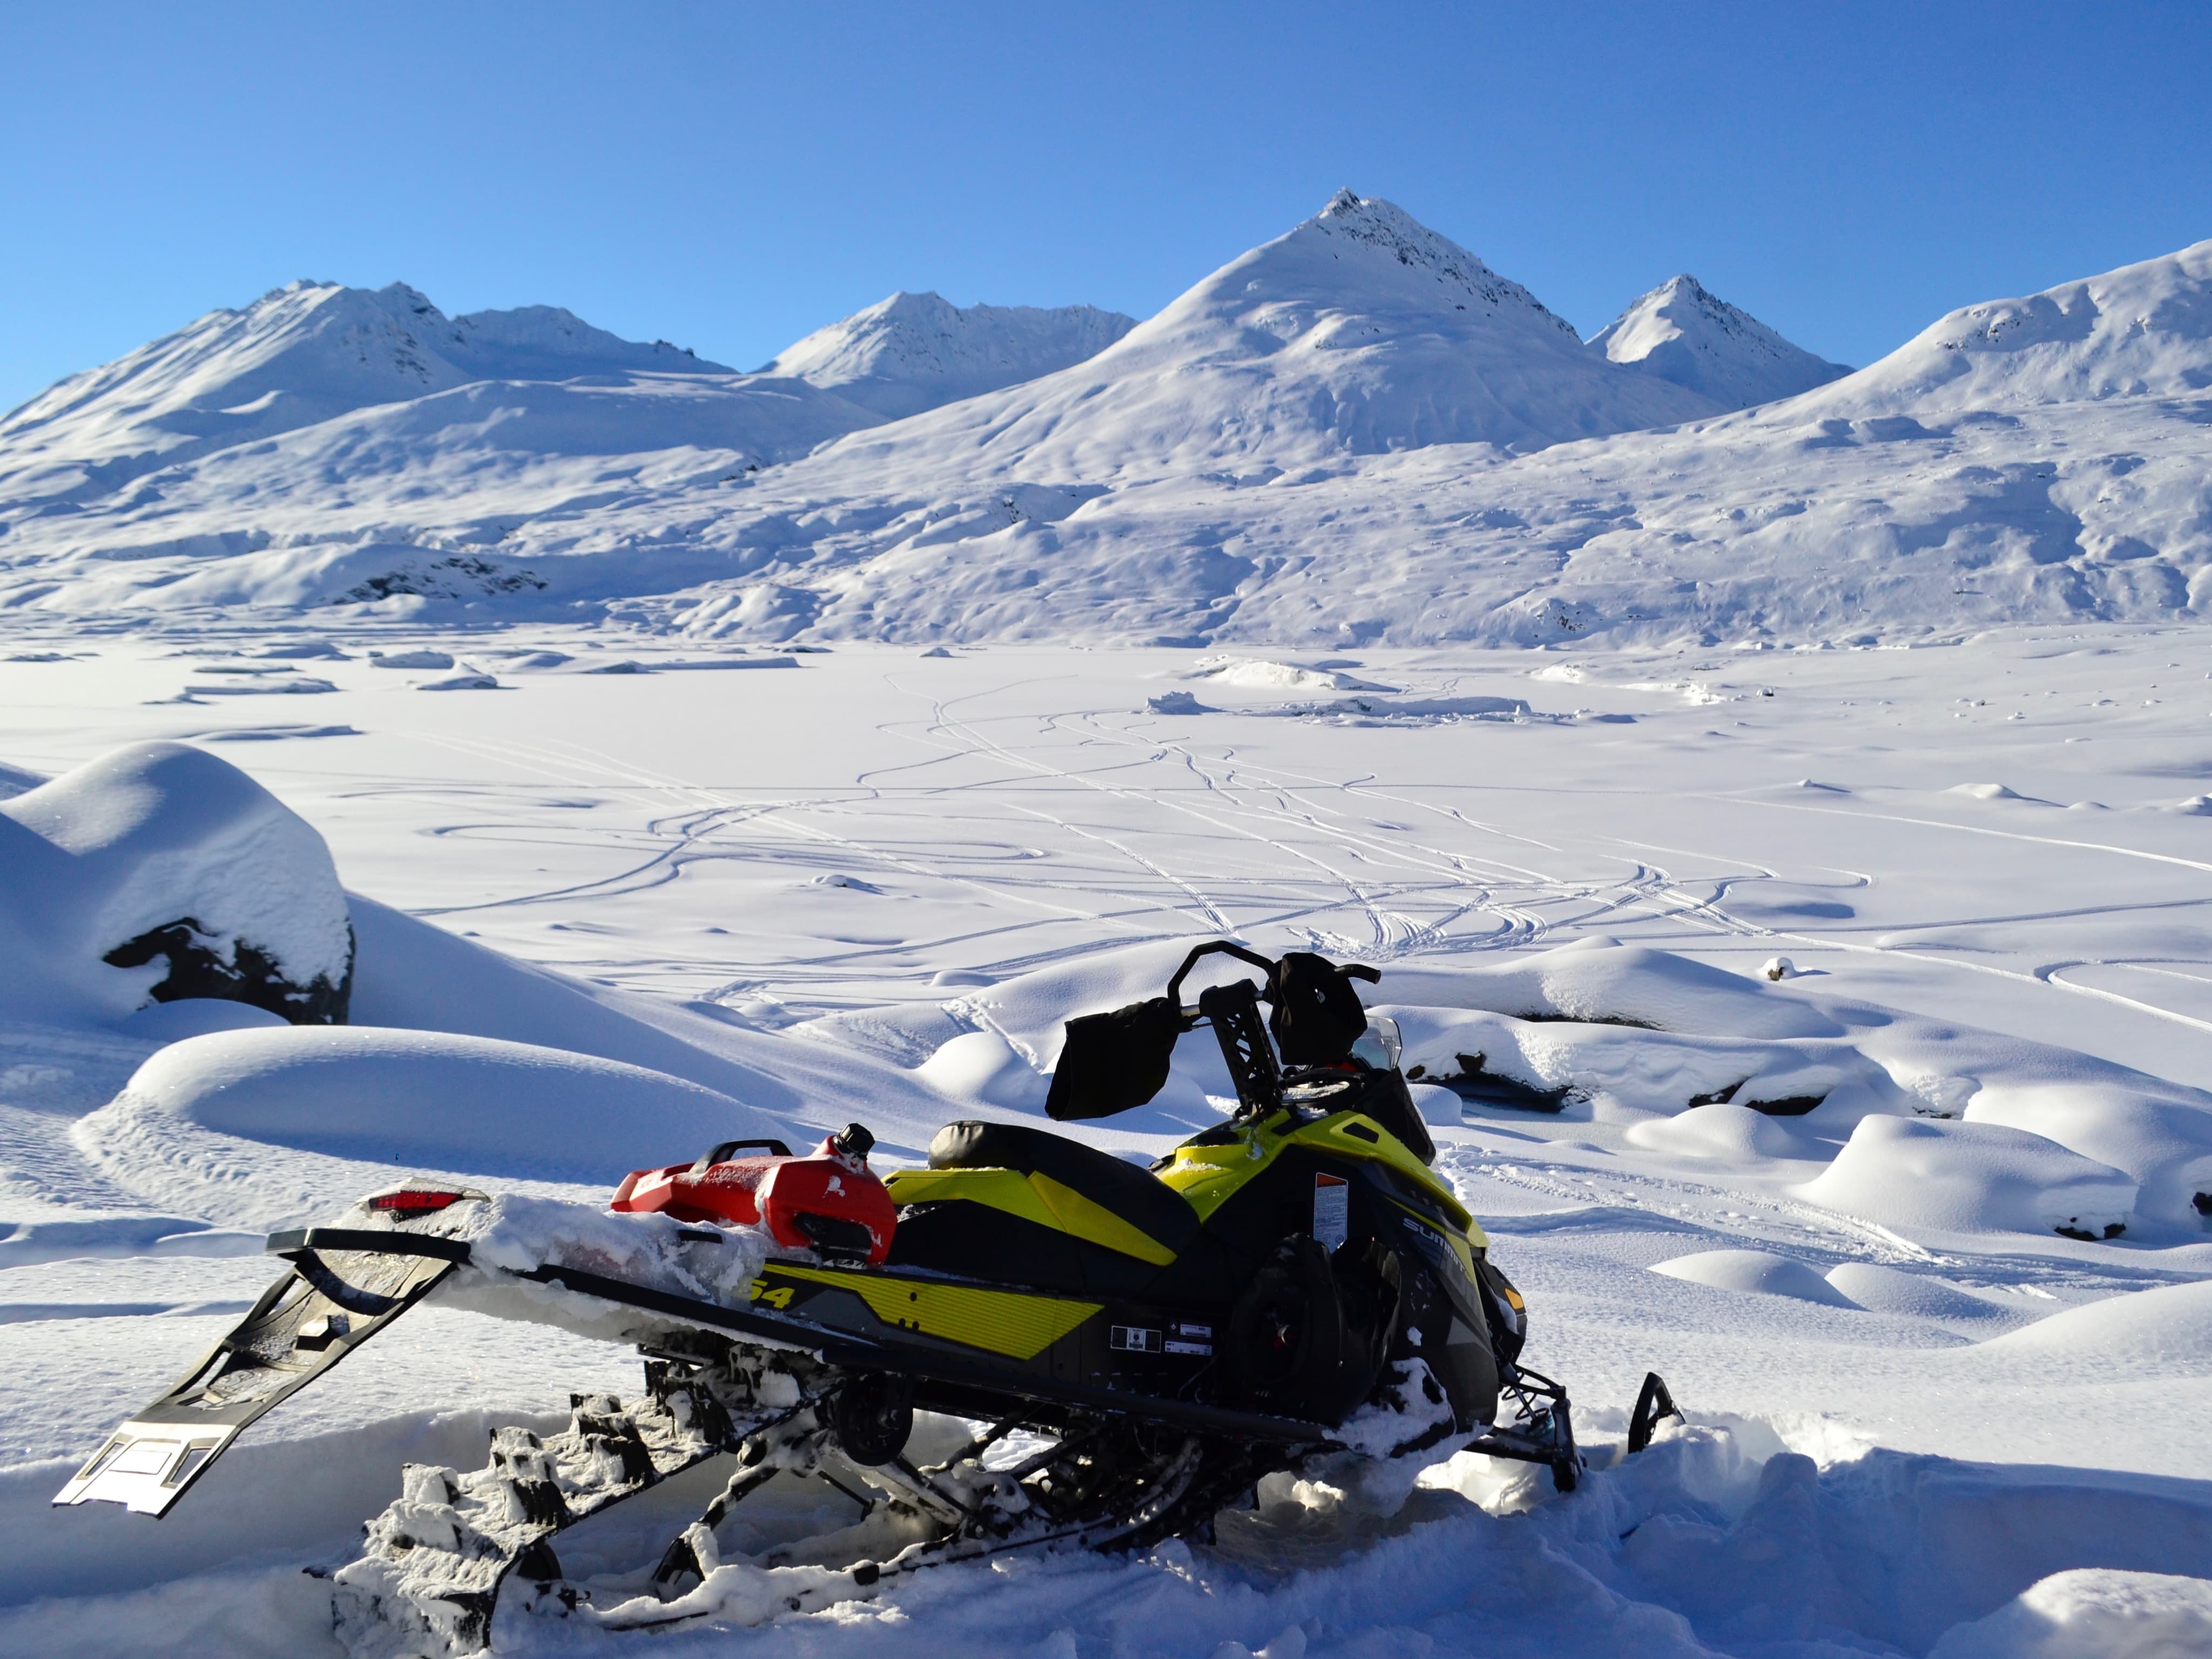 Bigtime fun on this multiday Alaskan Ski-Doo adventure in Girdwood, AK